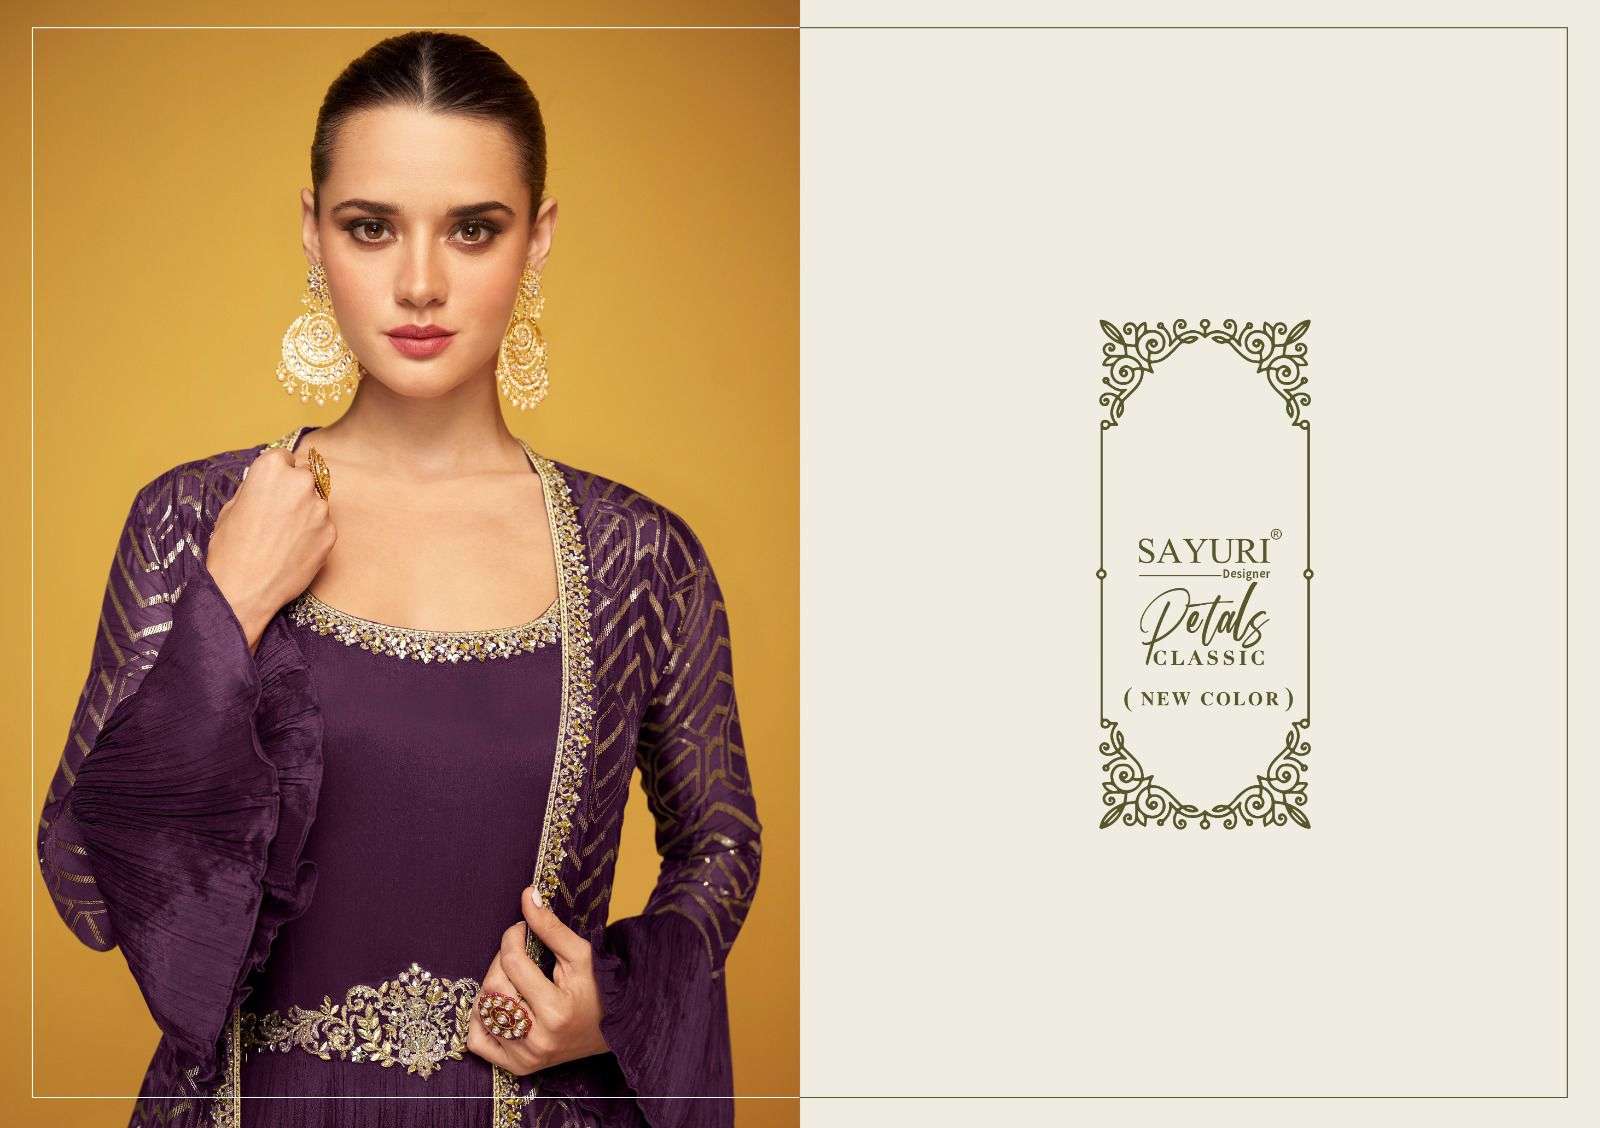 sayuri designer petals classic 5212 colour series georgette designer anarkali indo western suits collection wholesale rates